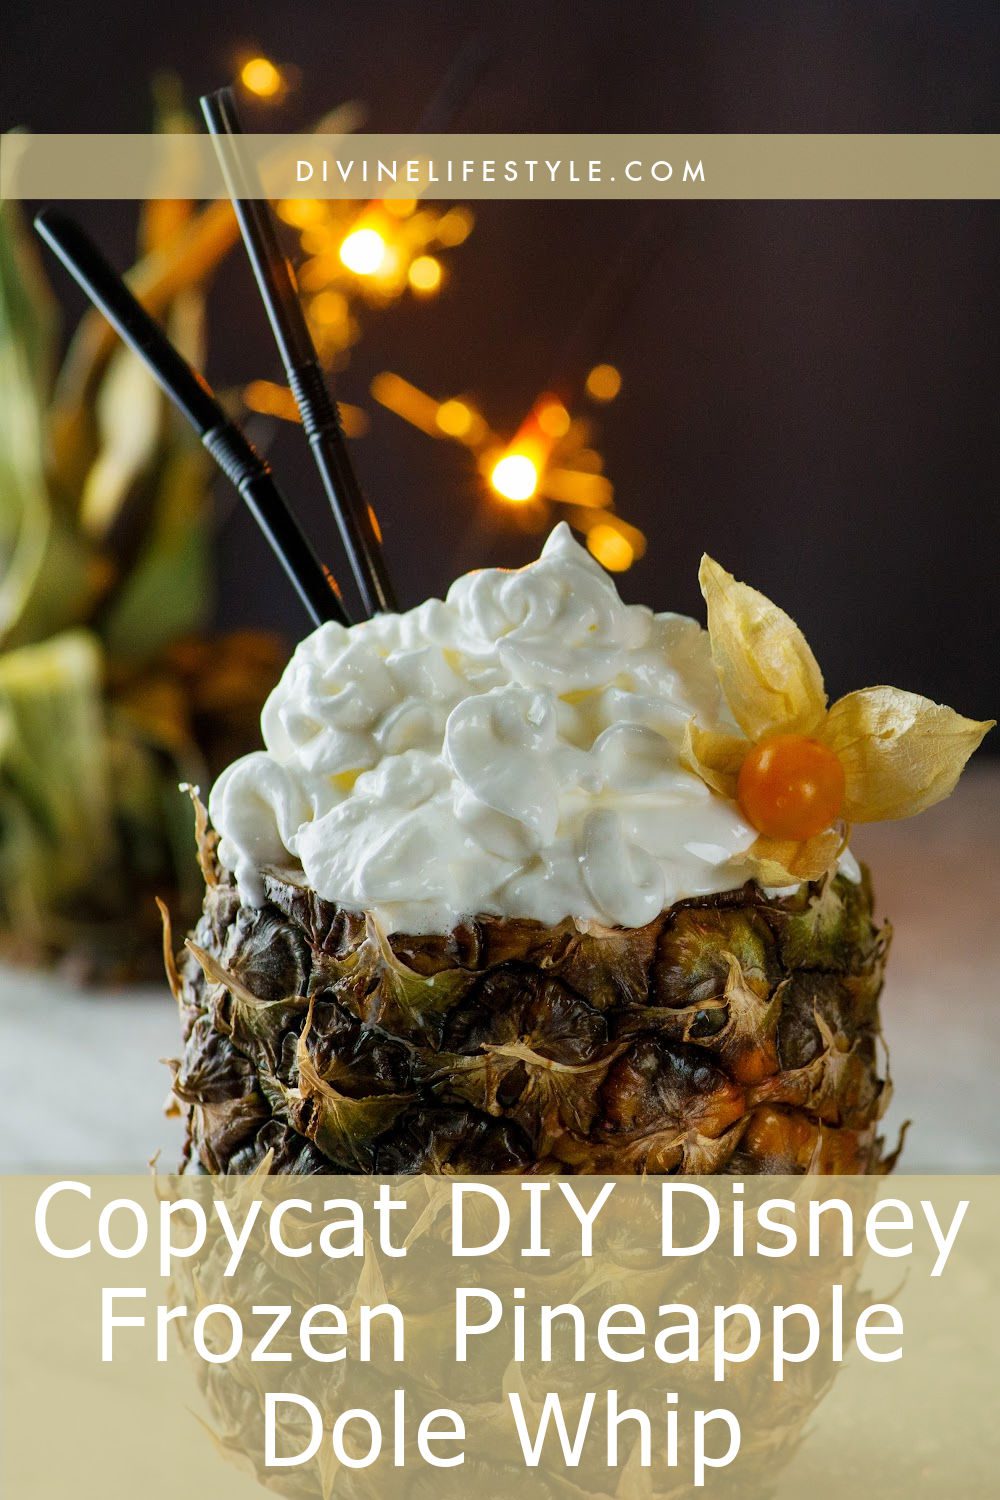 Copycat Disney Dole Whip Pineapple Recipe